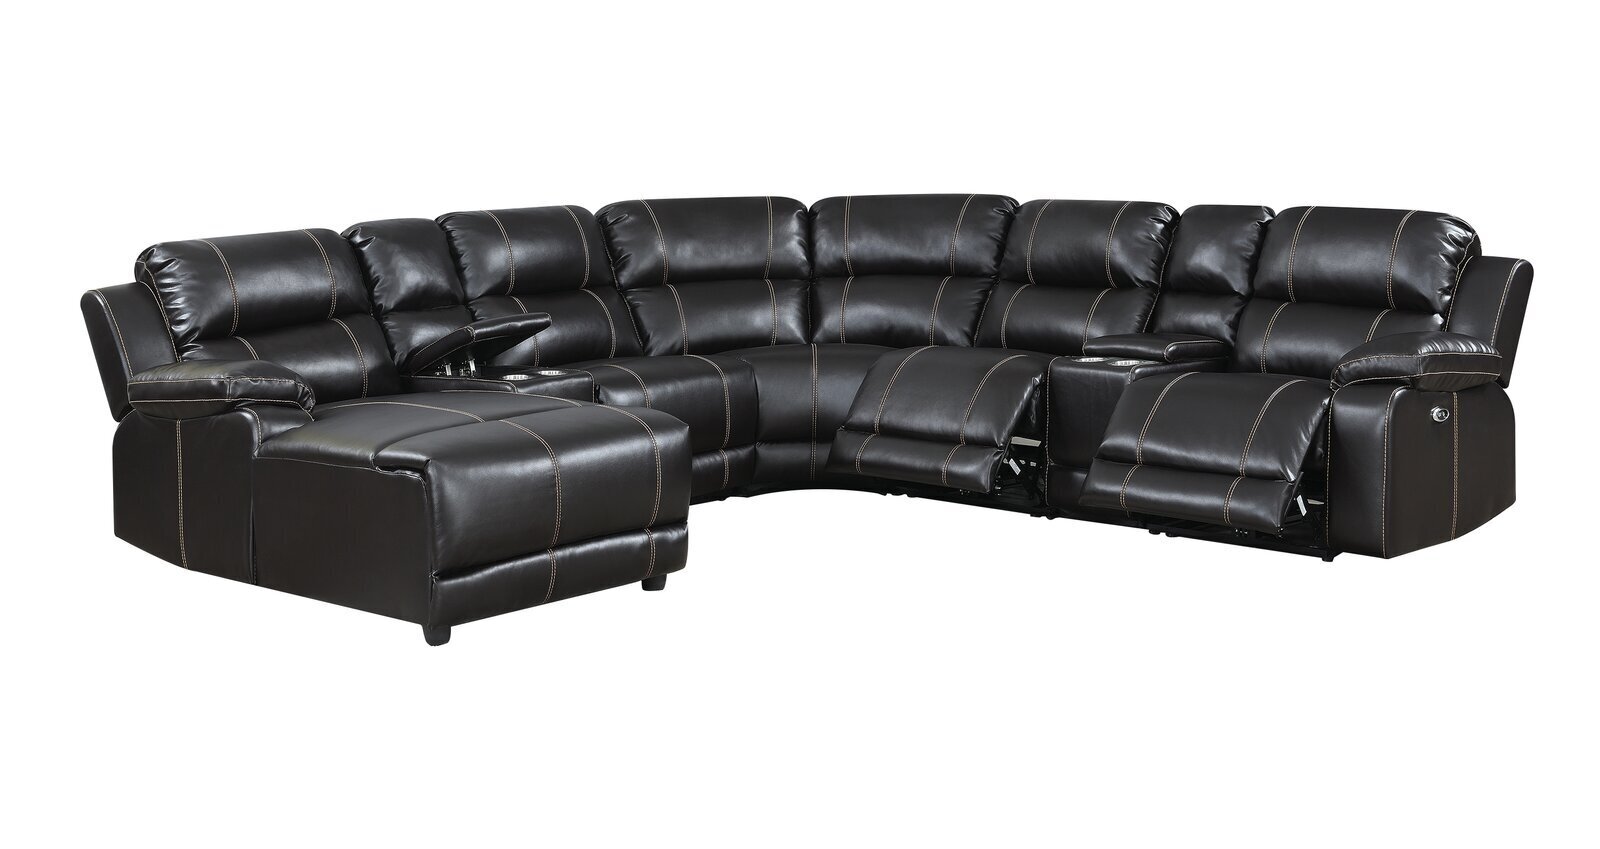 Shiny Modern Recliner Sofa Sectional